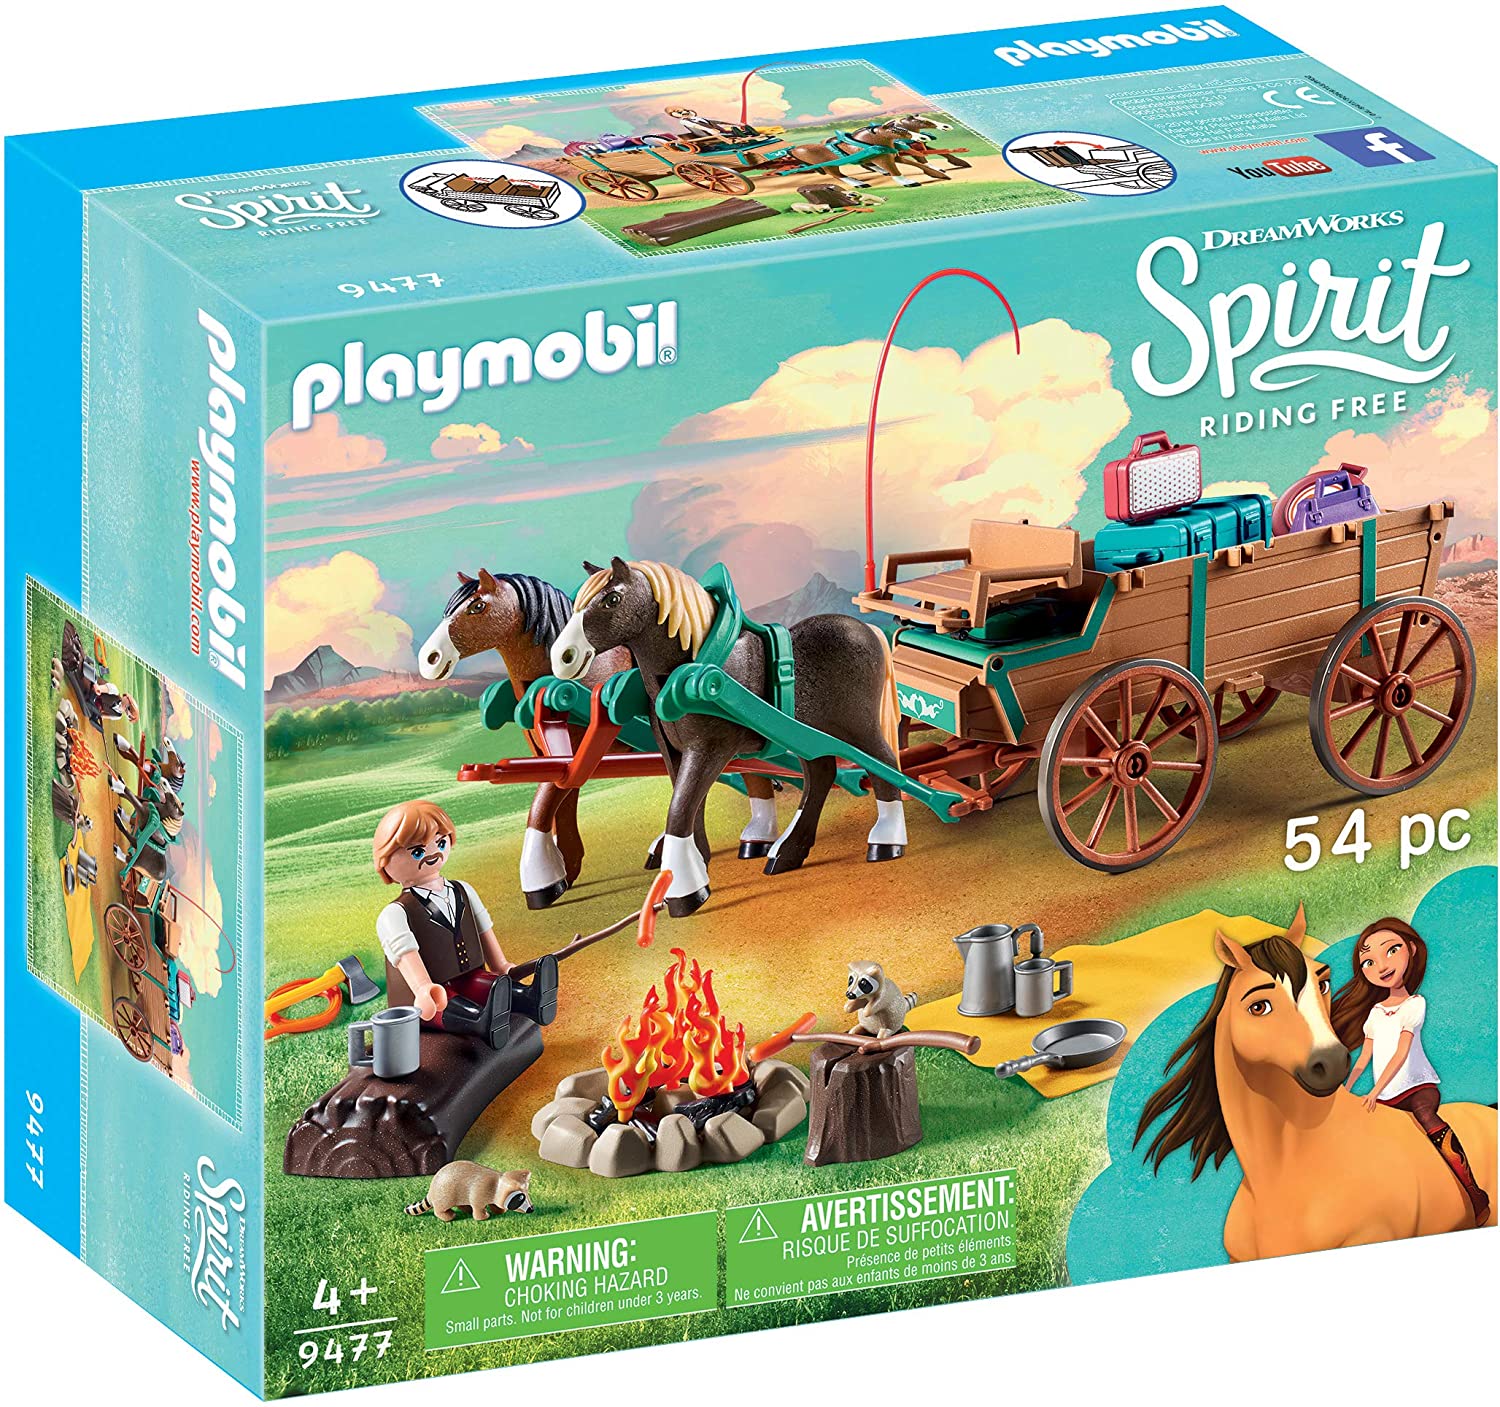 playmobil spirit riding free